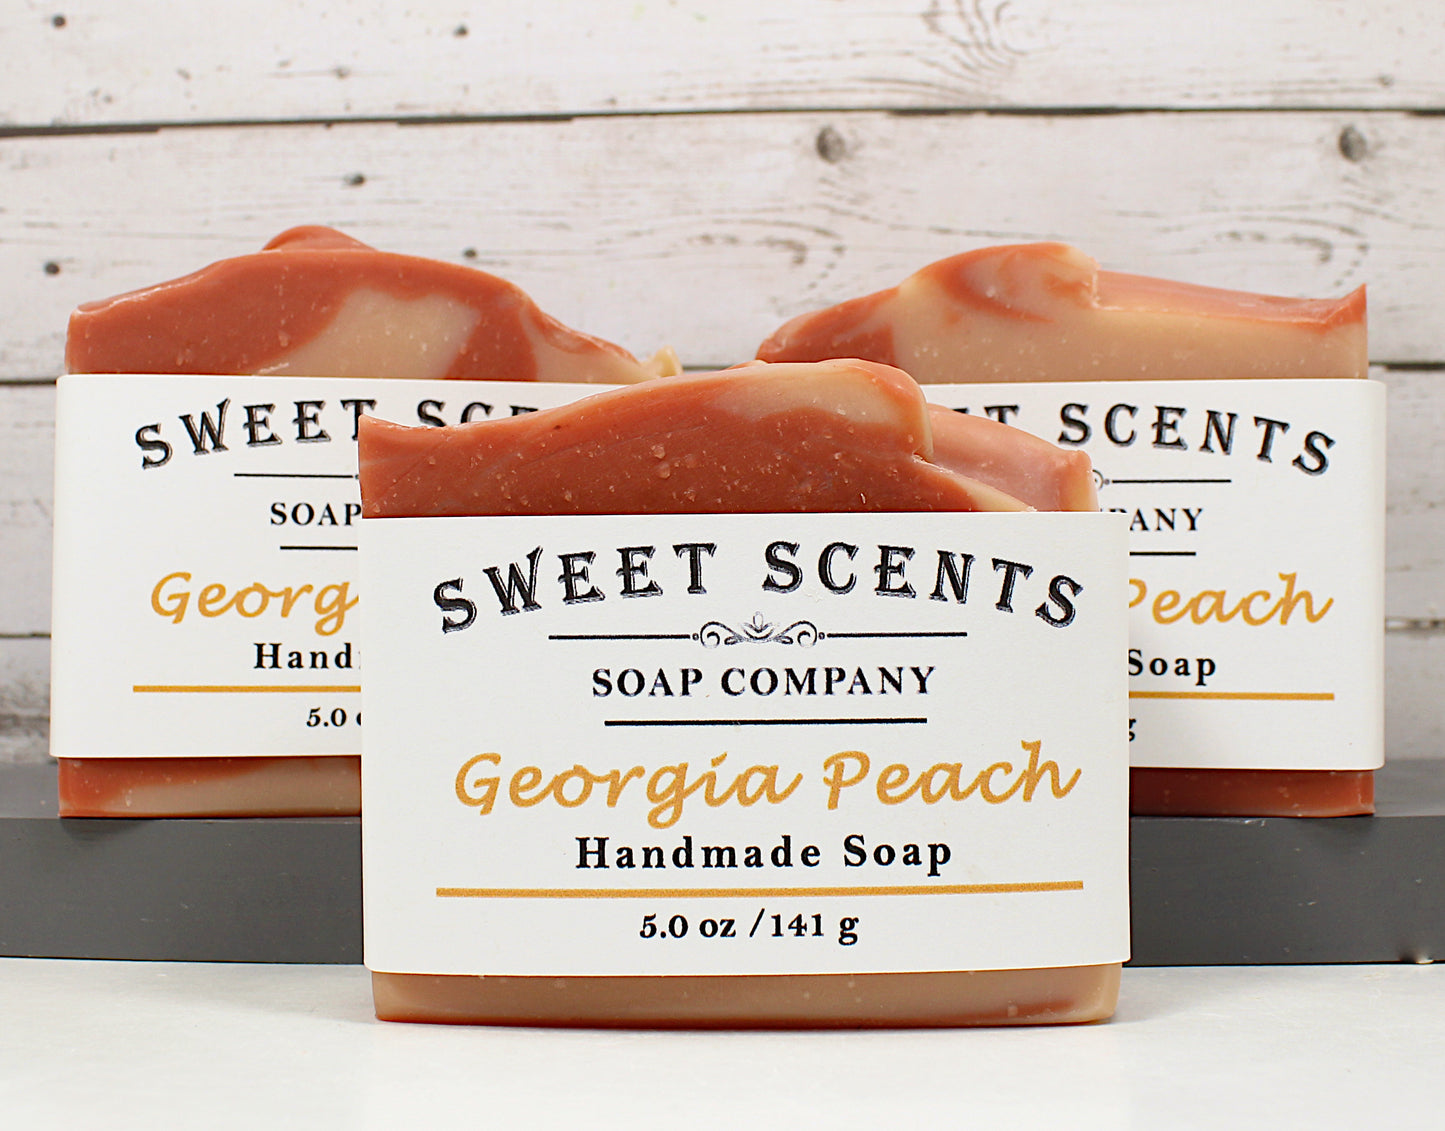 Georgia Peach Soap